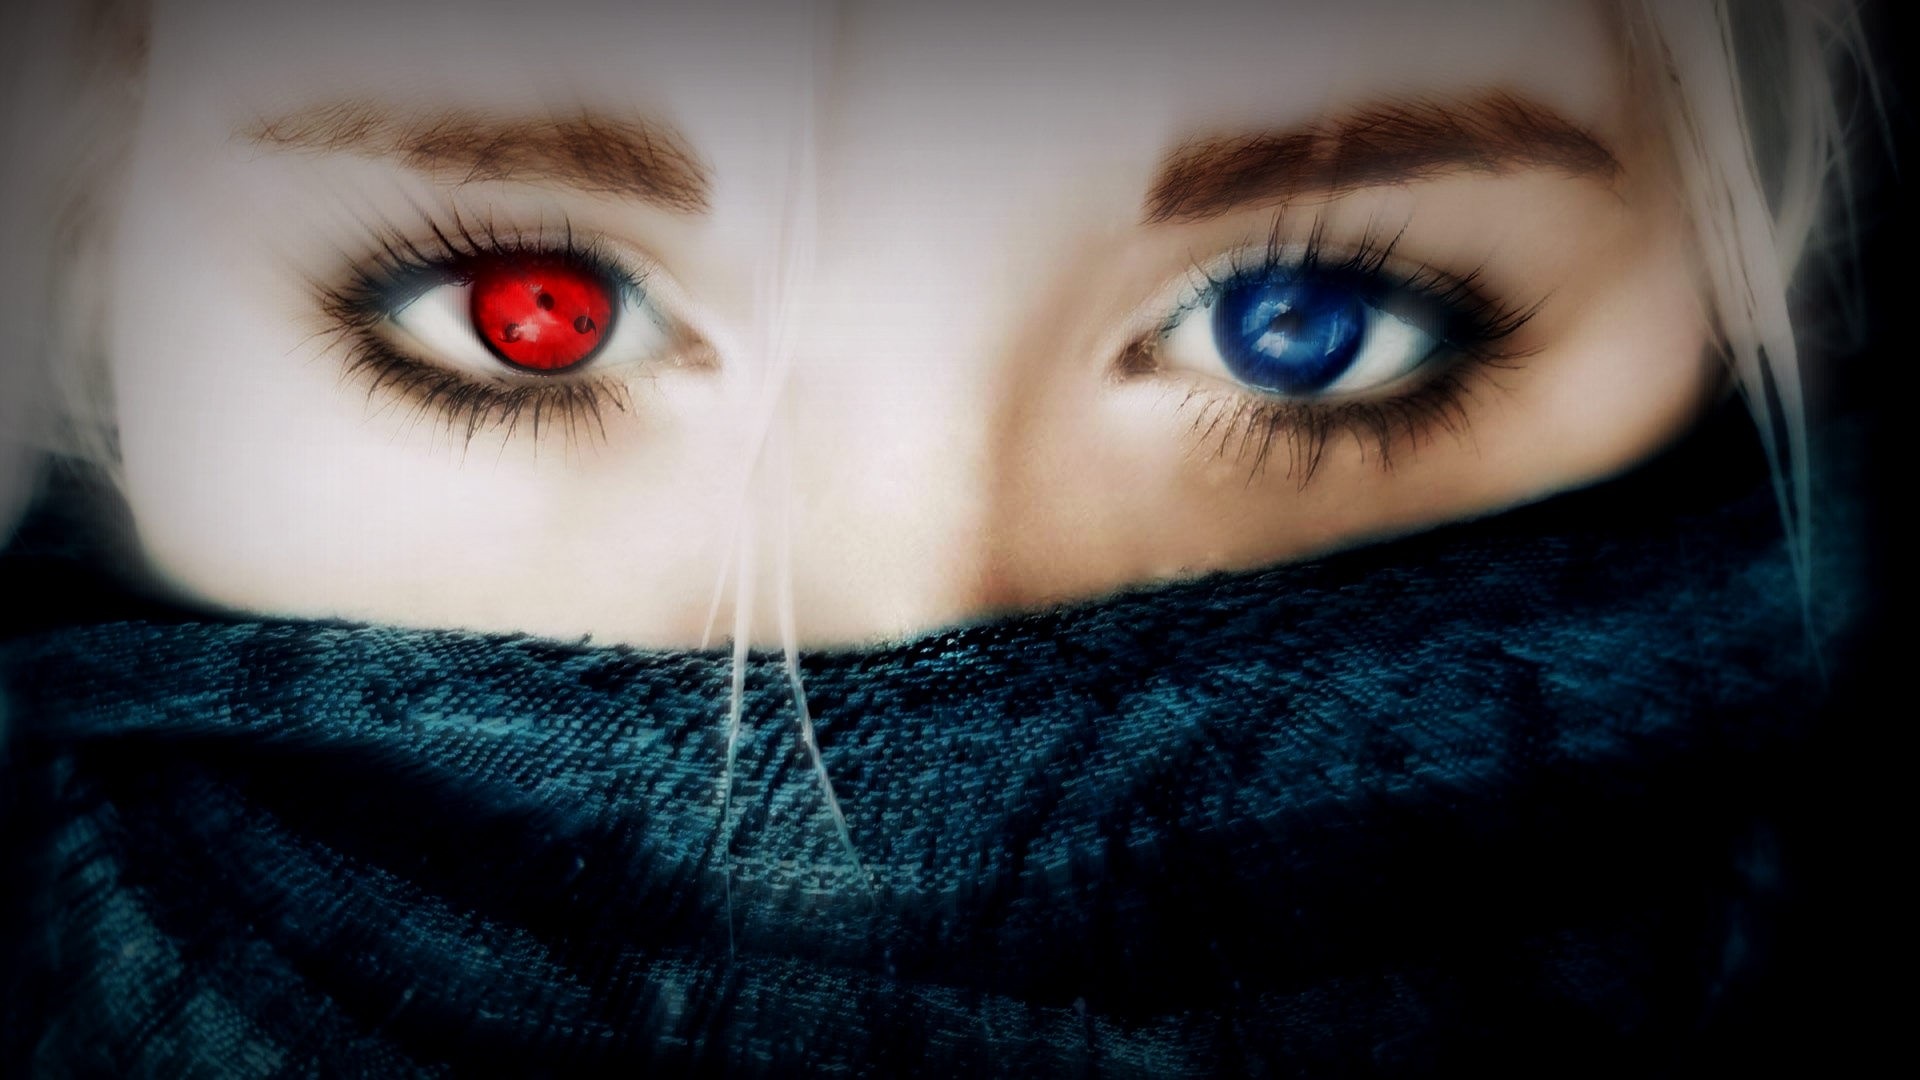 Glaza anguish. Фото глаза. Красно синие глаза. Темно синие глаза. Разноцветные глаза.